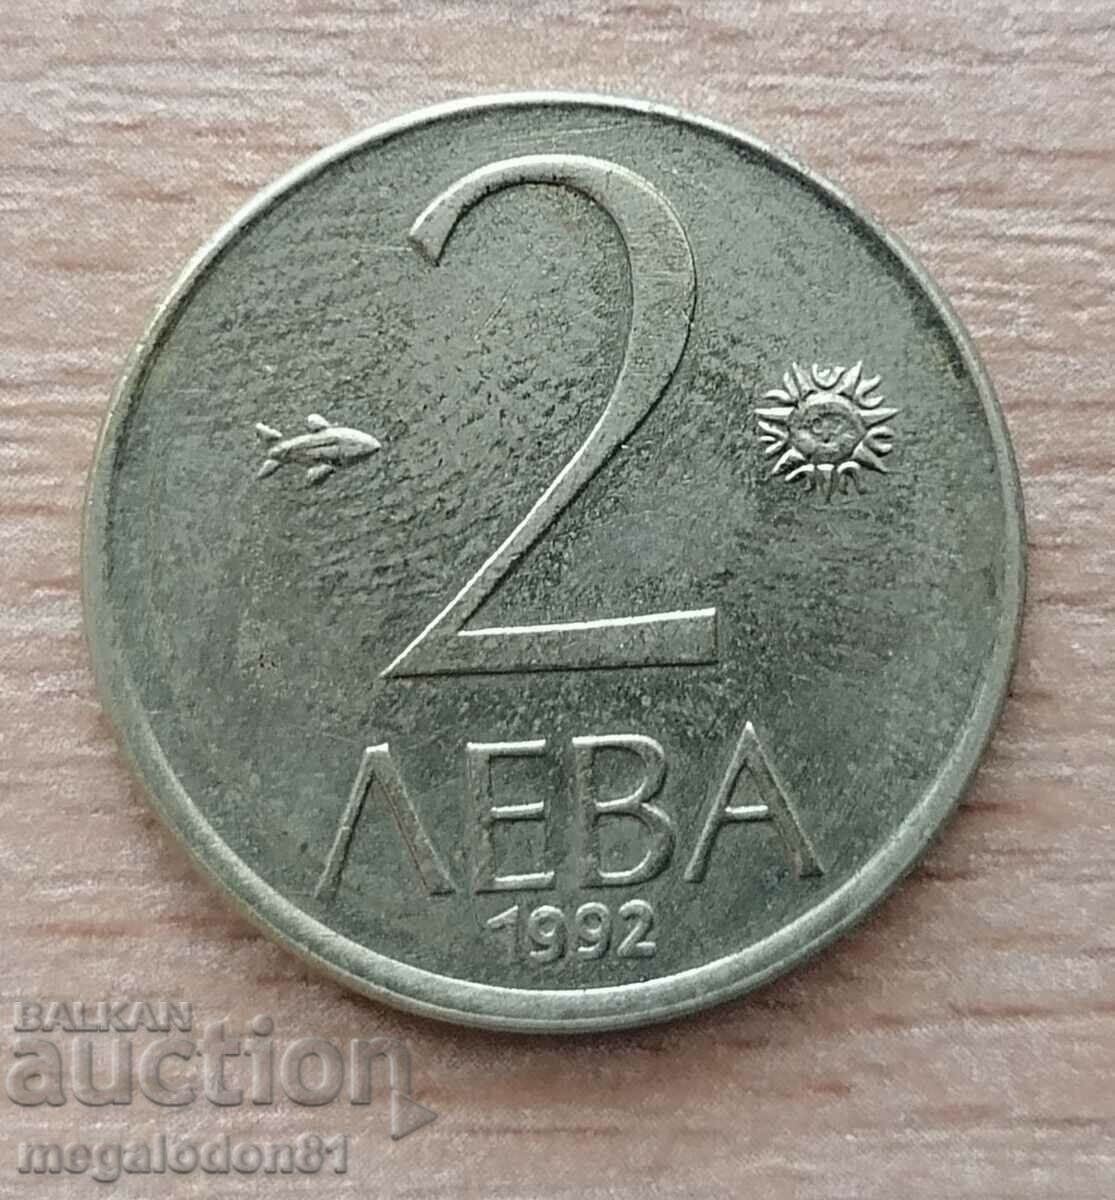 Bulgaria - 2 BGN 1992